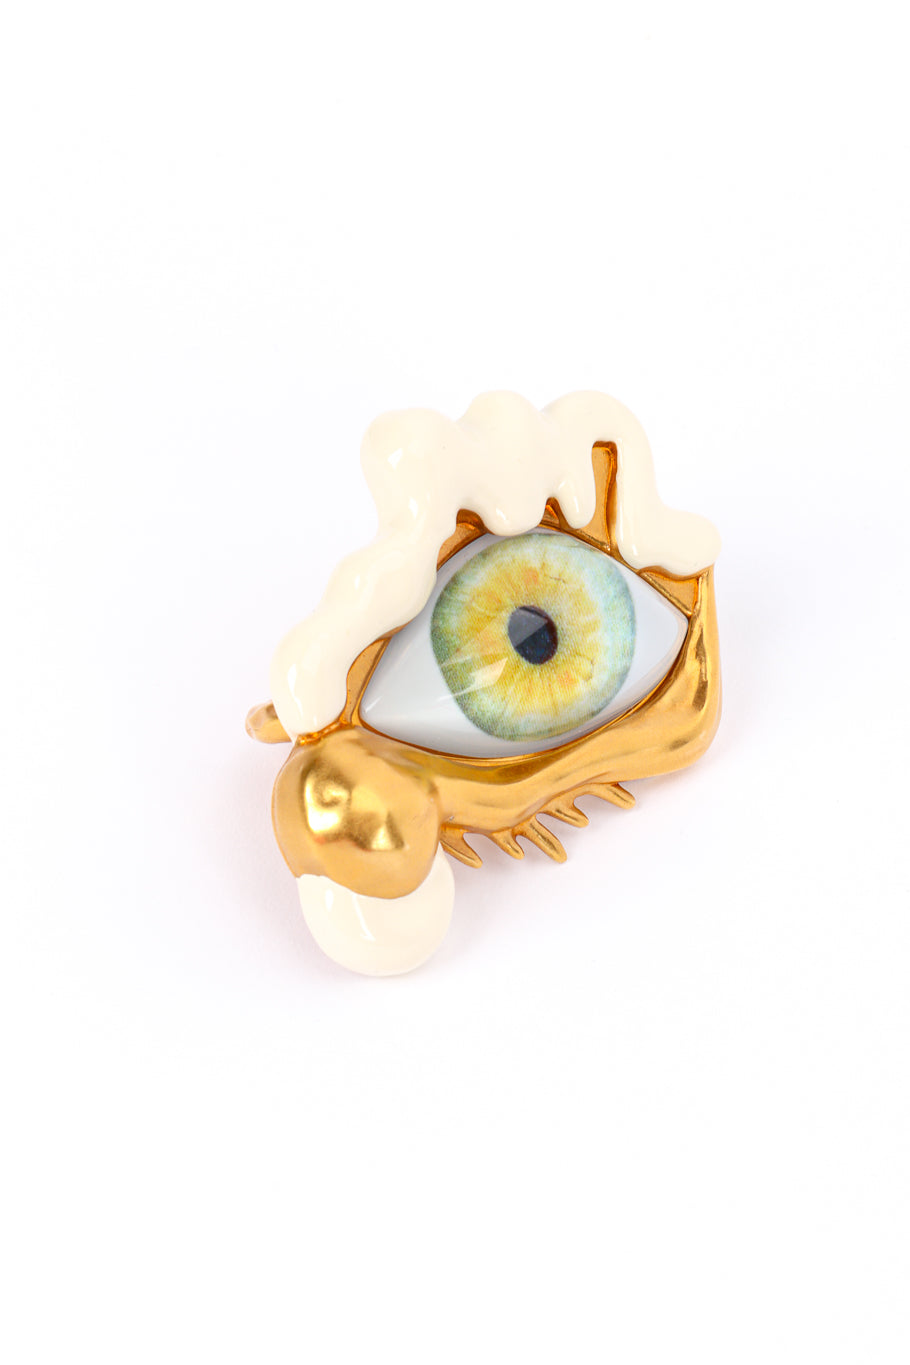 Schiaparelli Surrealist Eye Ring flat lay @recessla